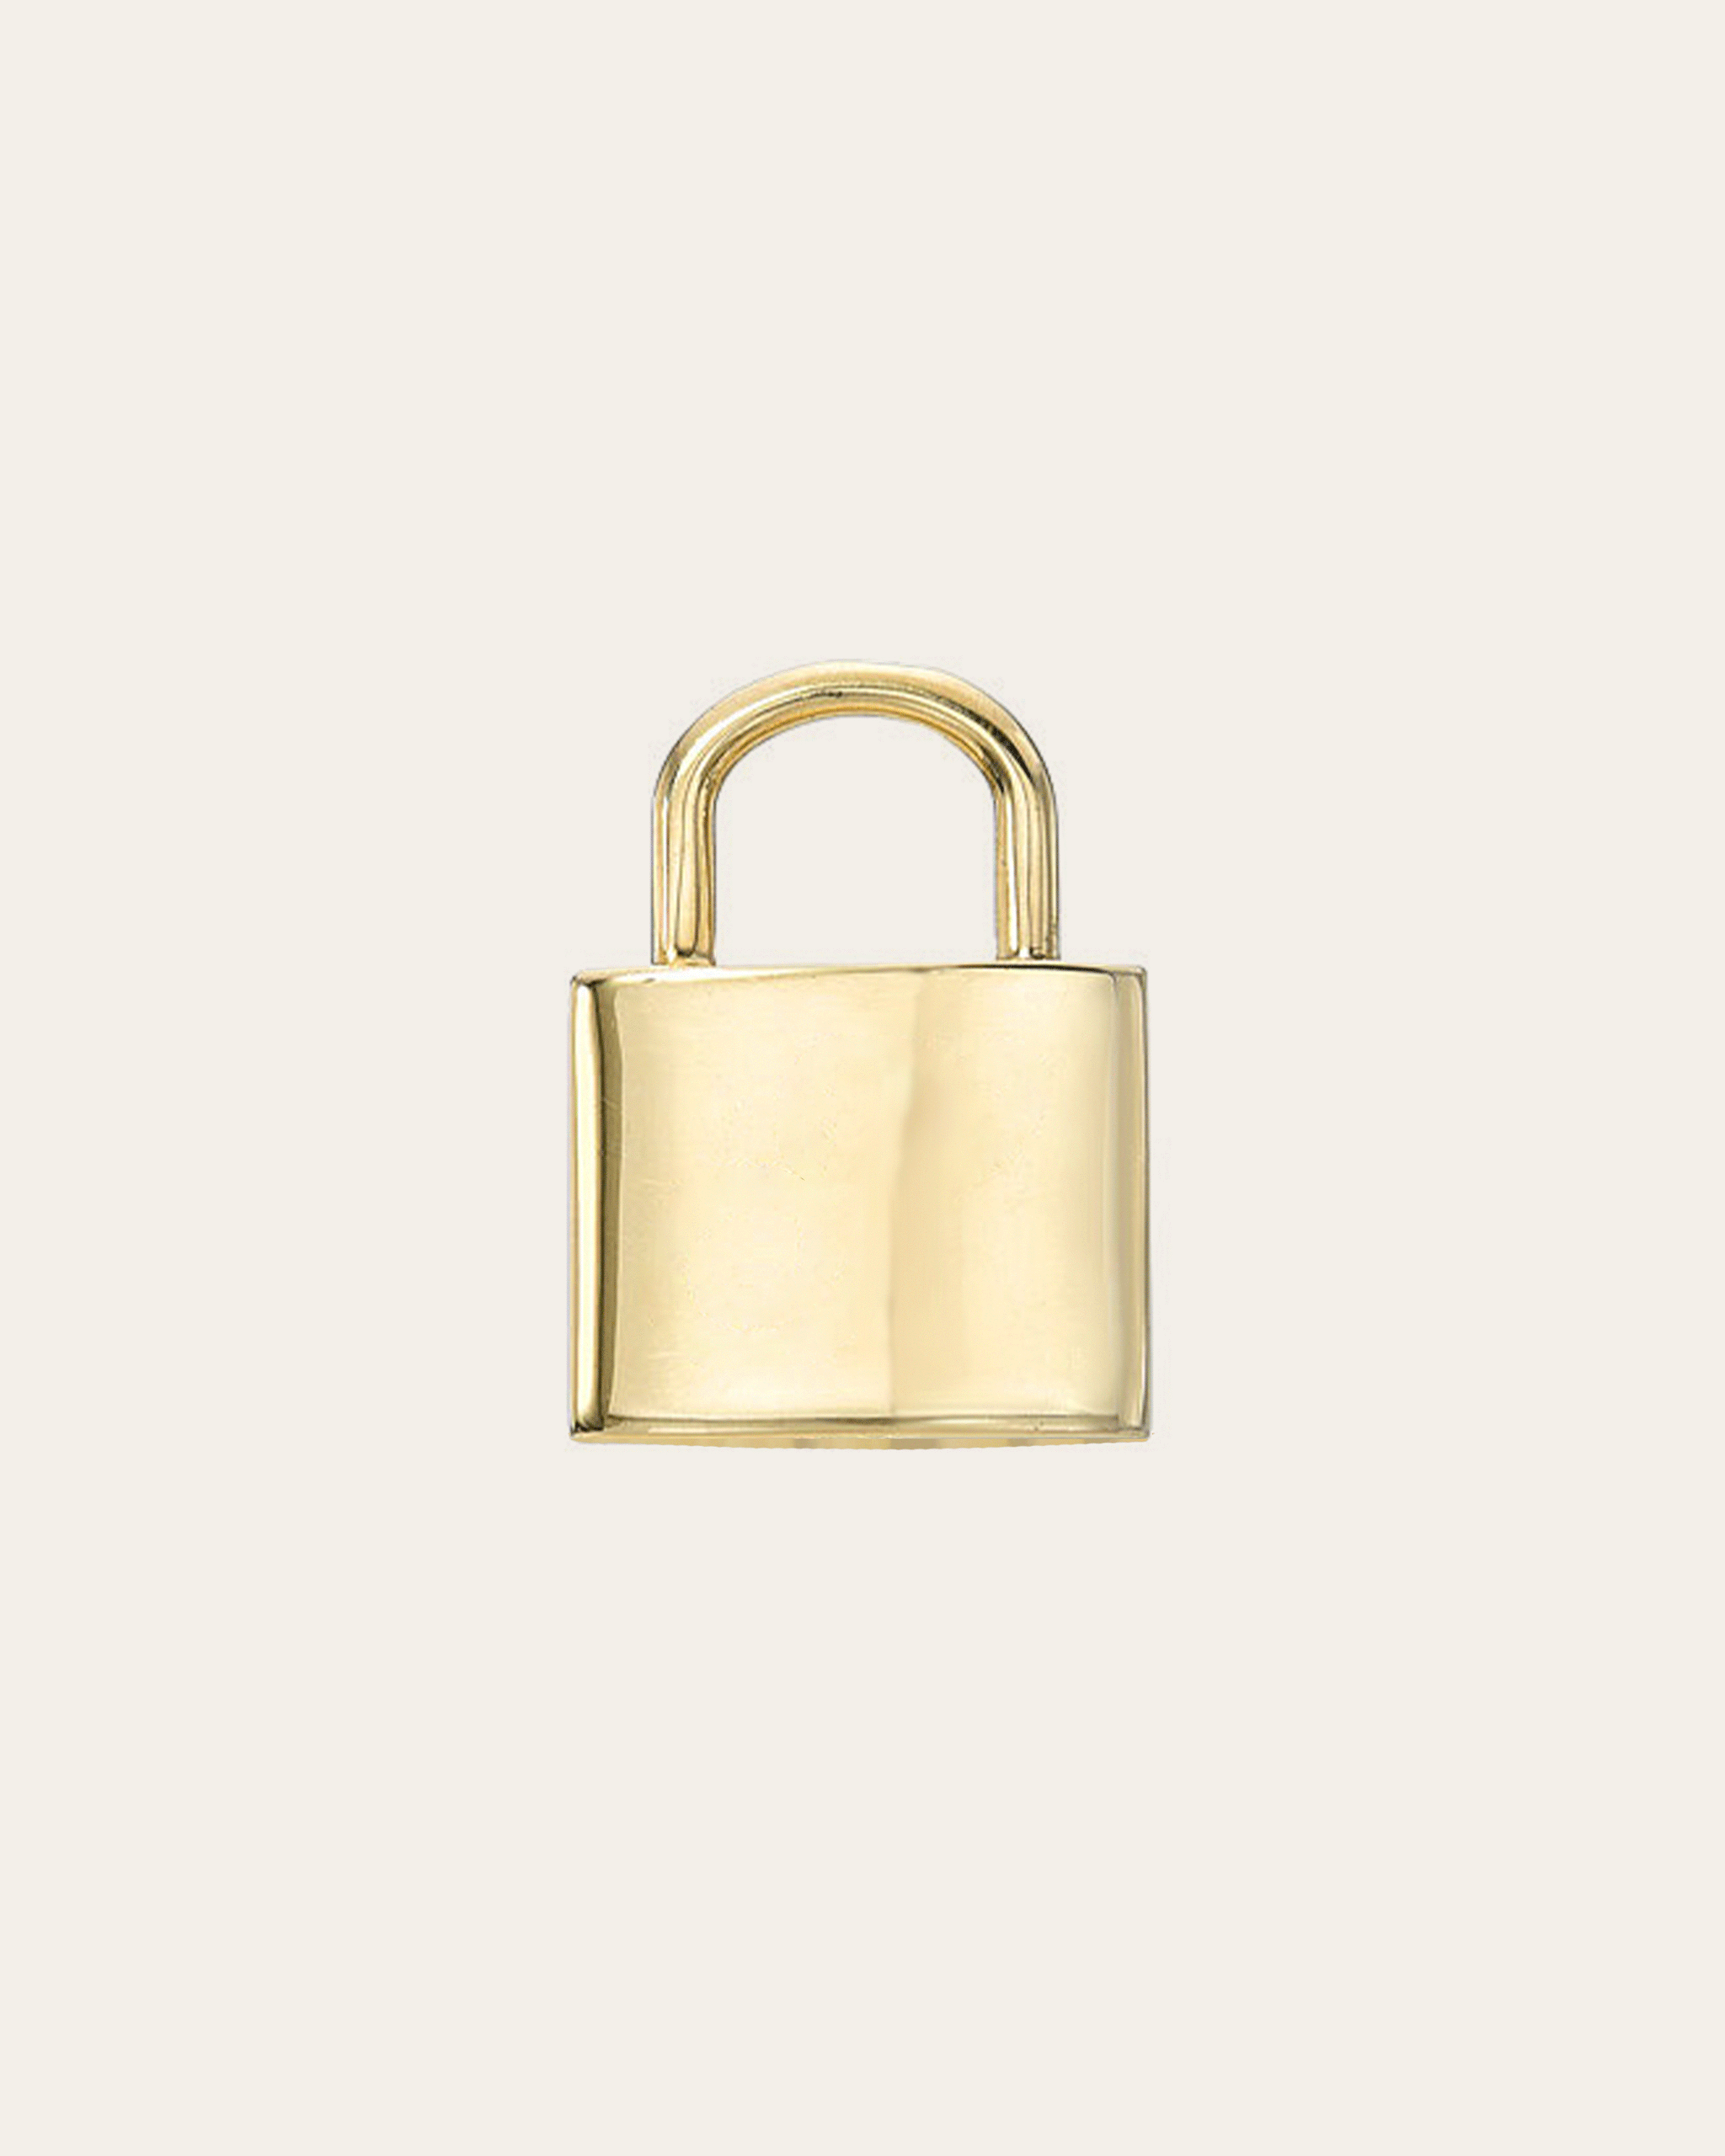 gold lock pendant